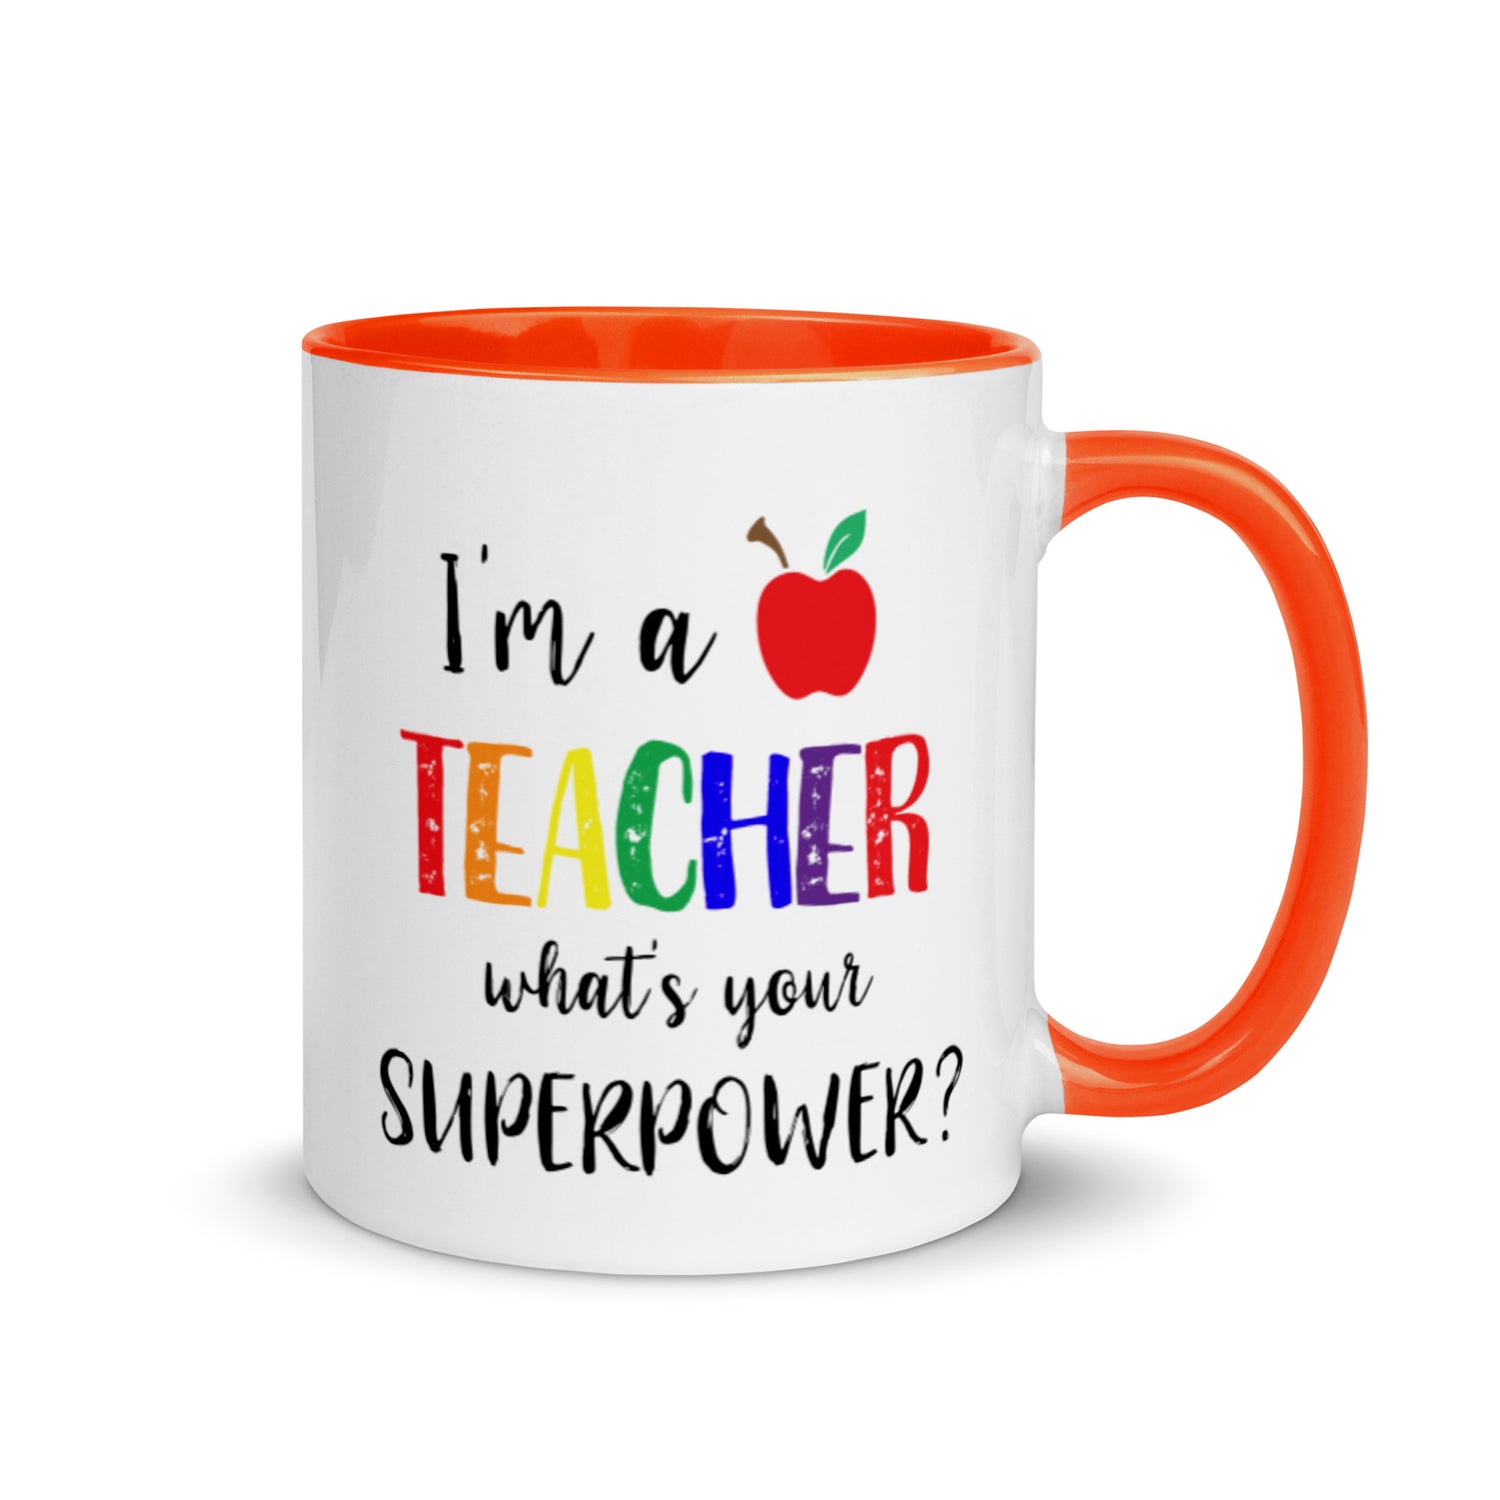 I'm a teacher what's your superpower mug with orange interior